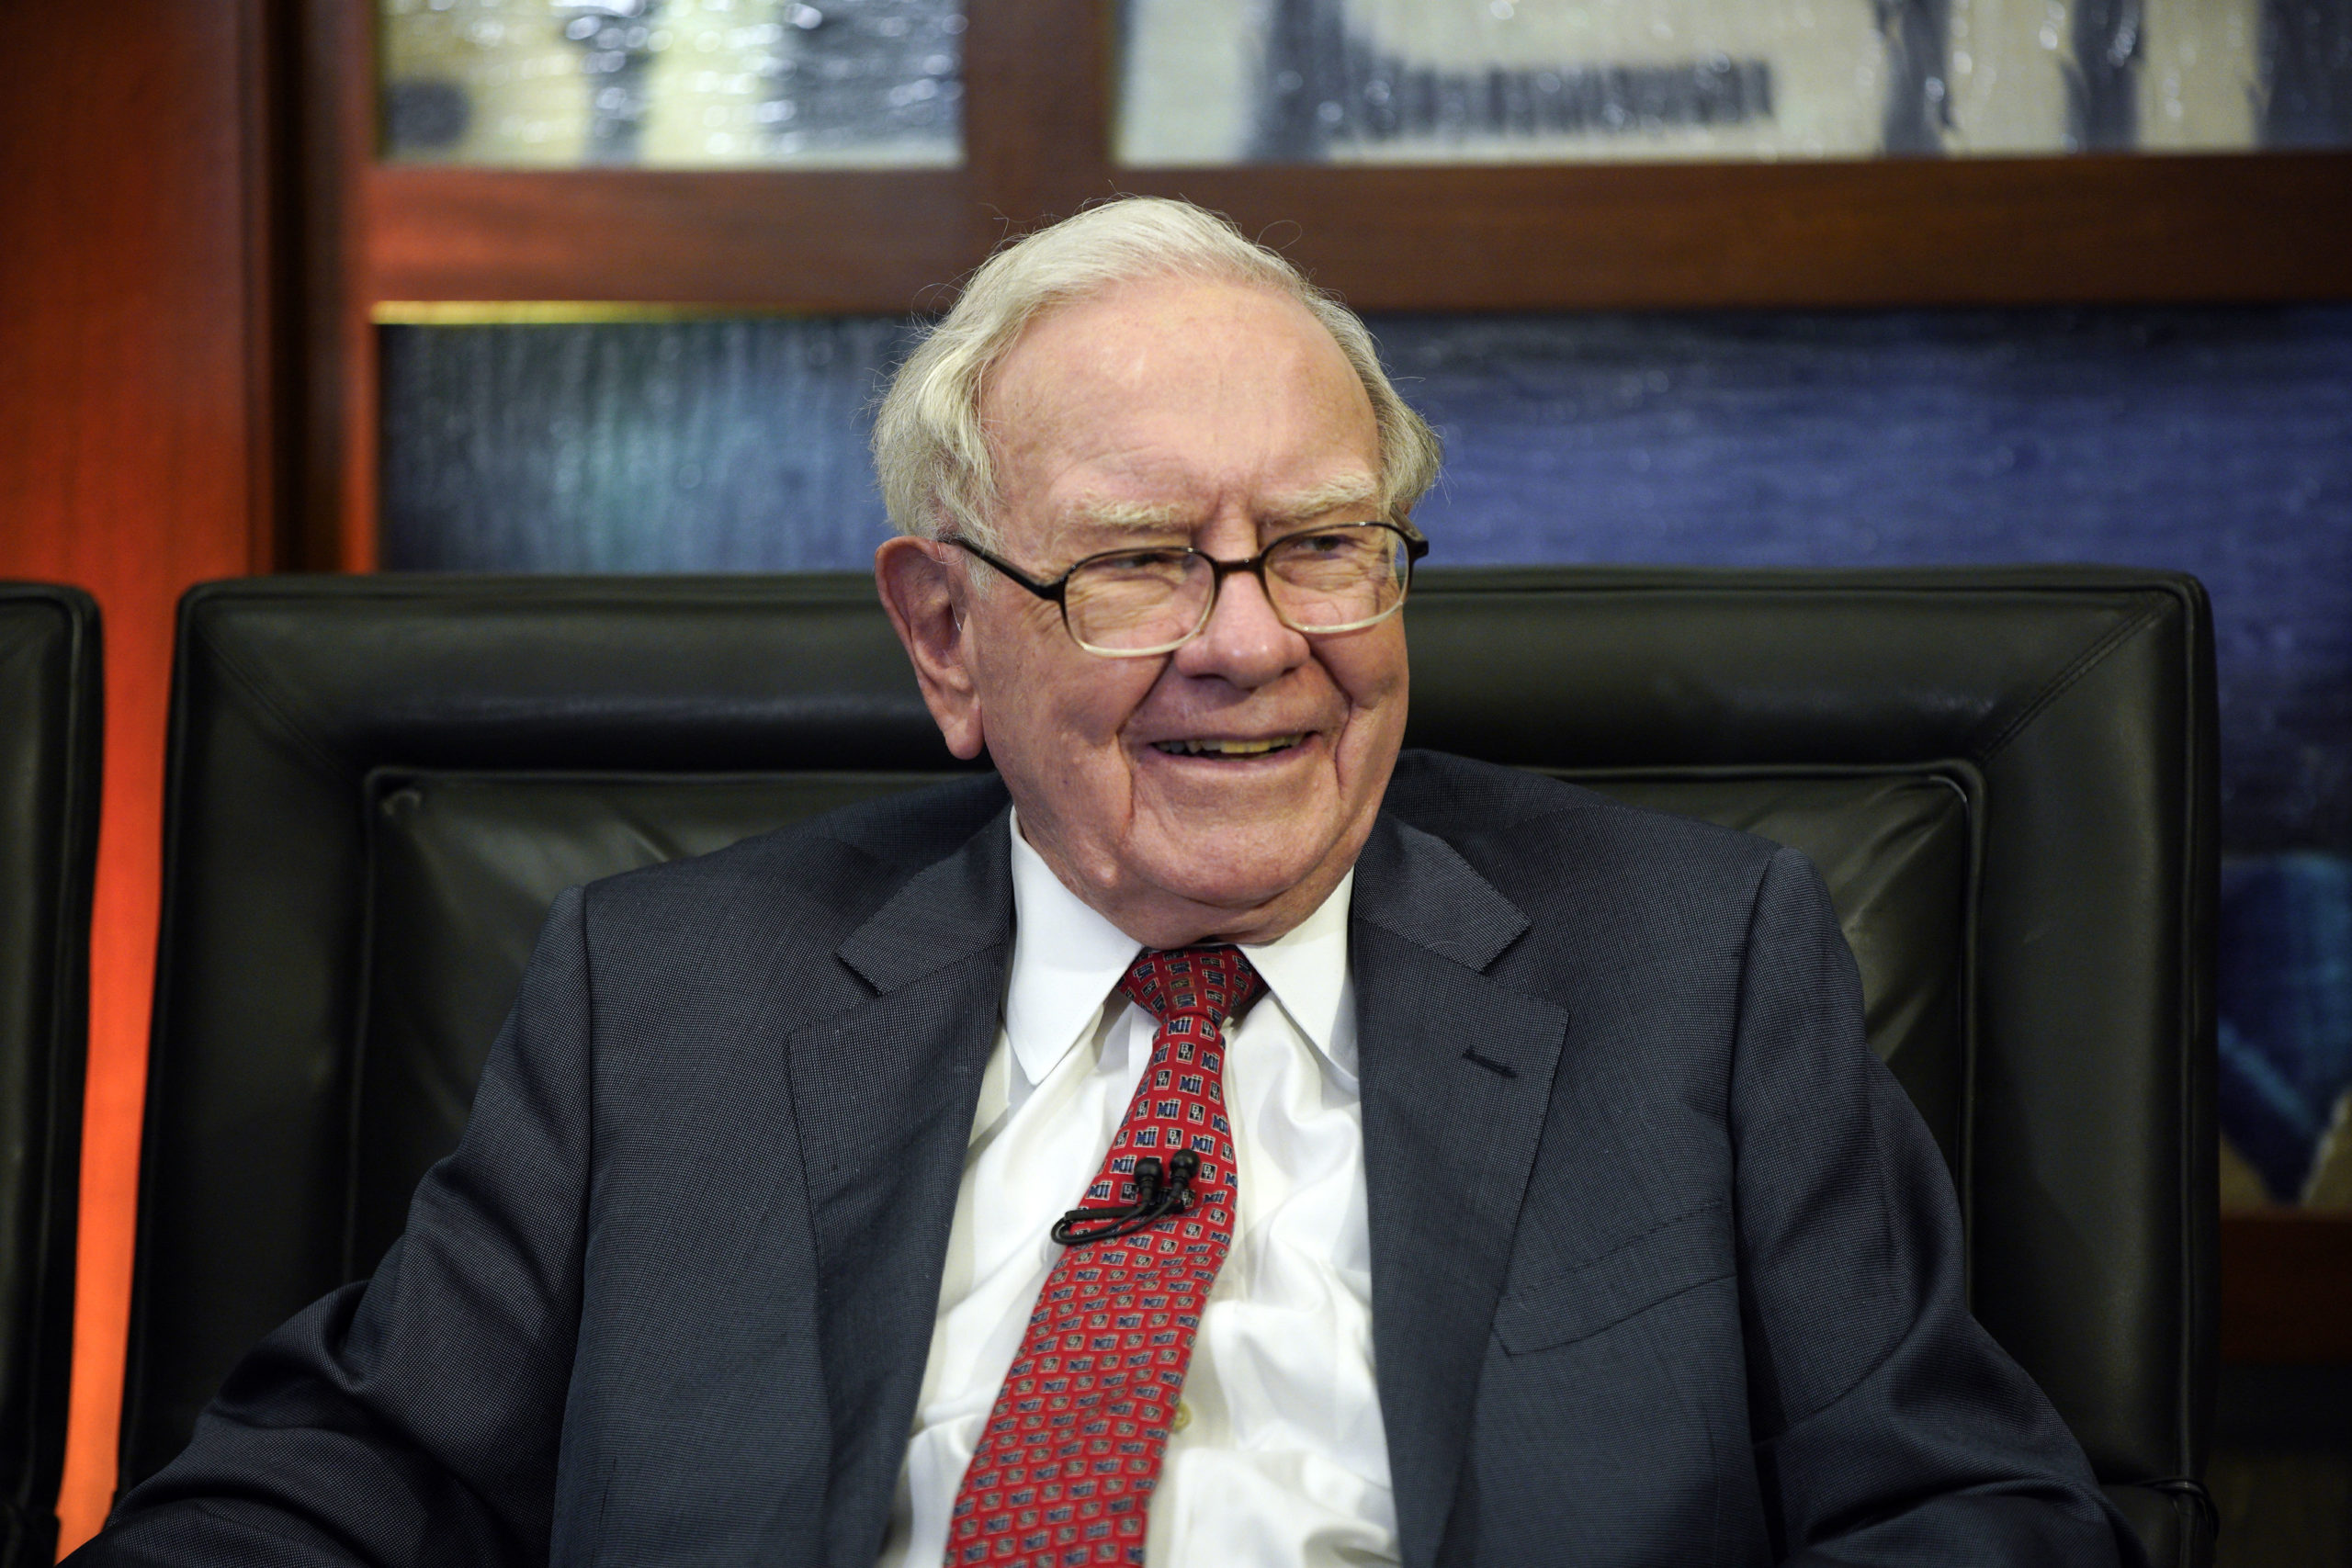 Berkshire Hathaway Chairman and CEO Warren Buffett smiles during an interview in Omaha, Nebraska, on May 7, 2018.